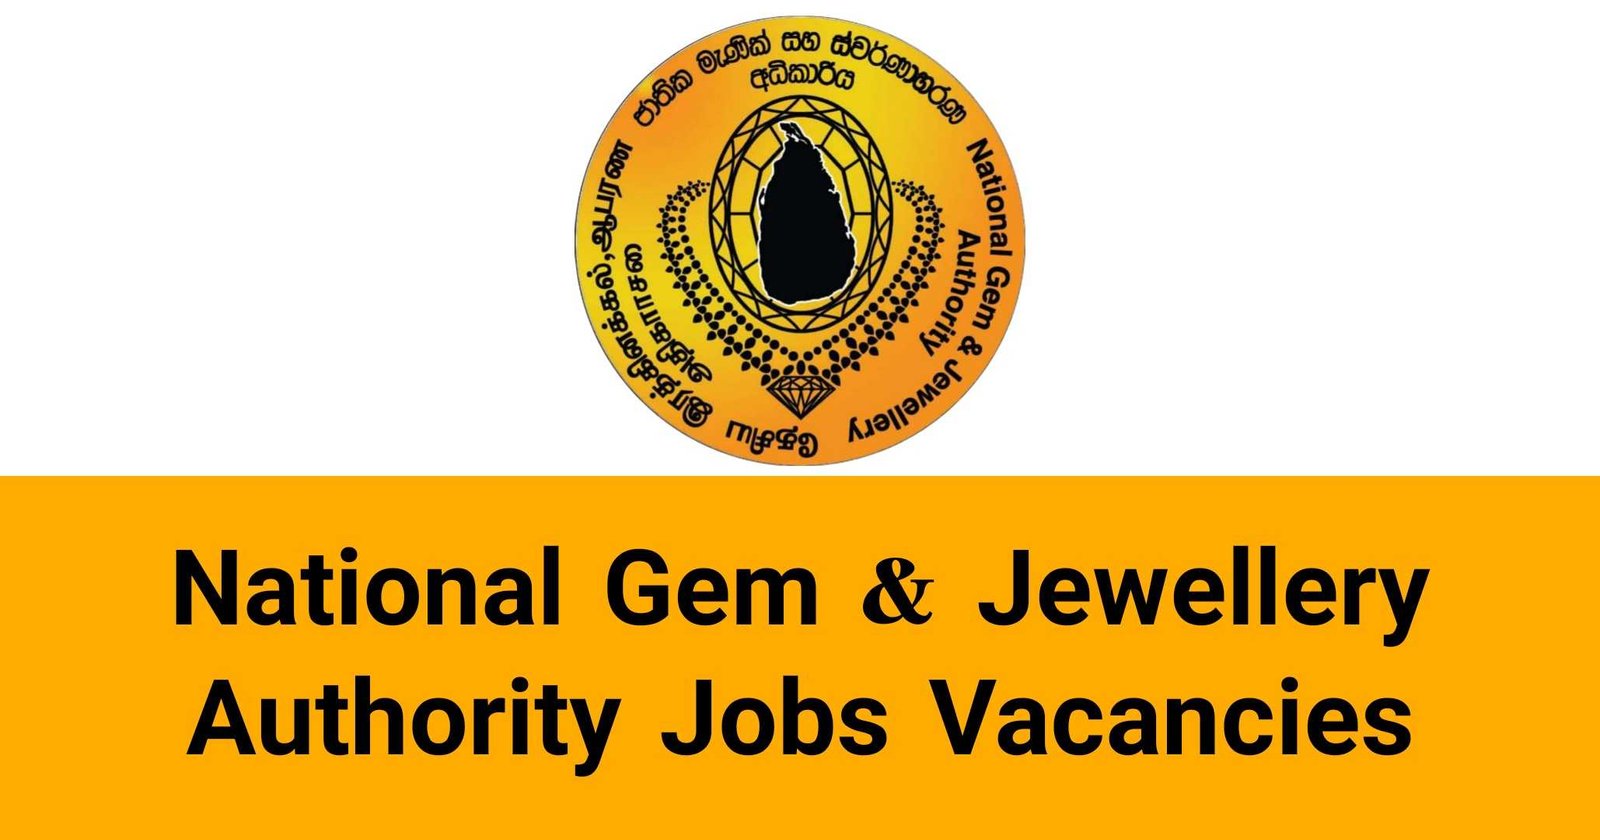 National Gem & Jewellery Authority Jobs Vacancies Careers